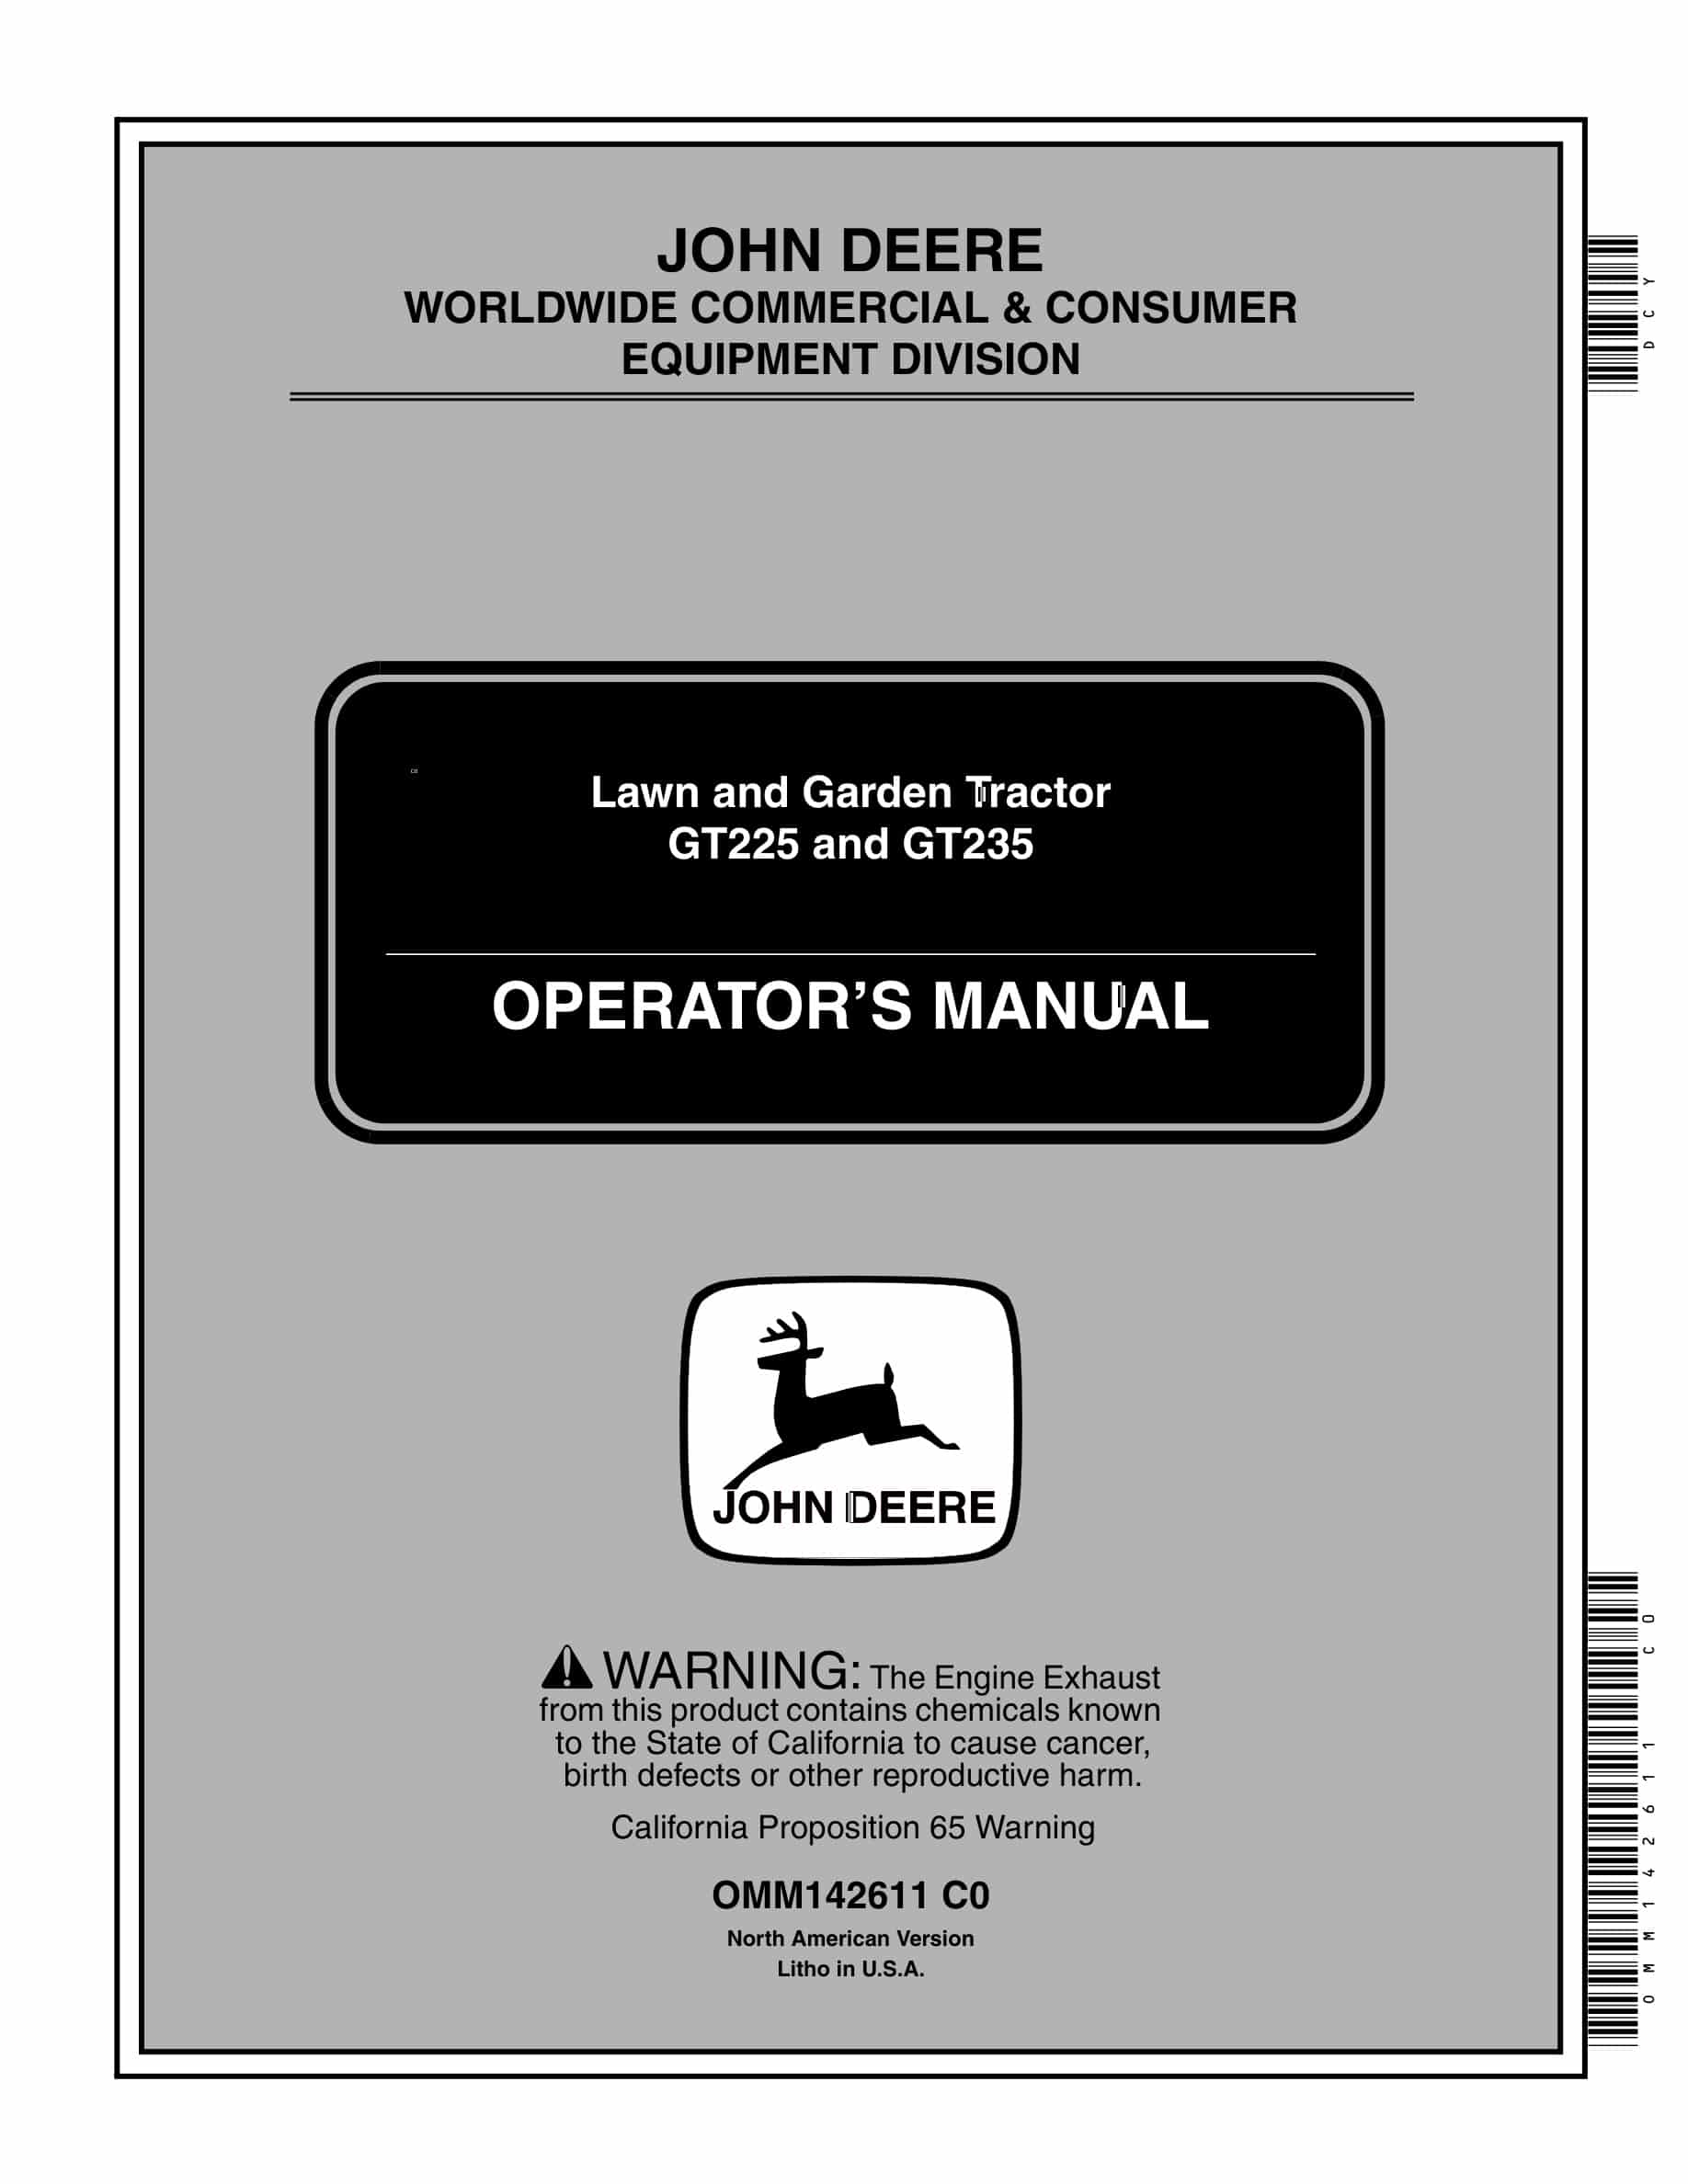 John Deere GT225 and GT235 Tractor Operator Manual OMM142611-1